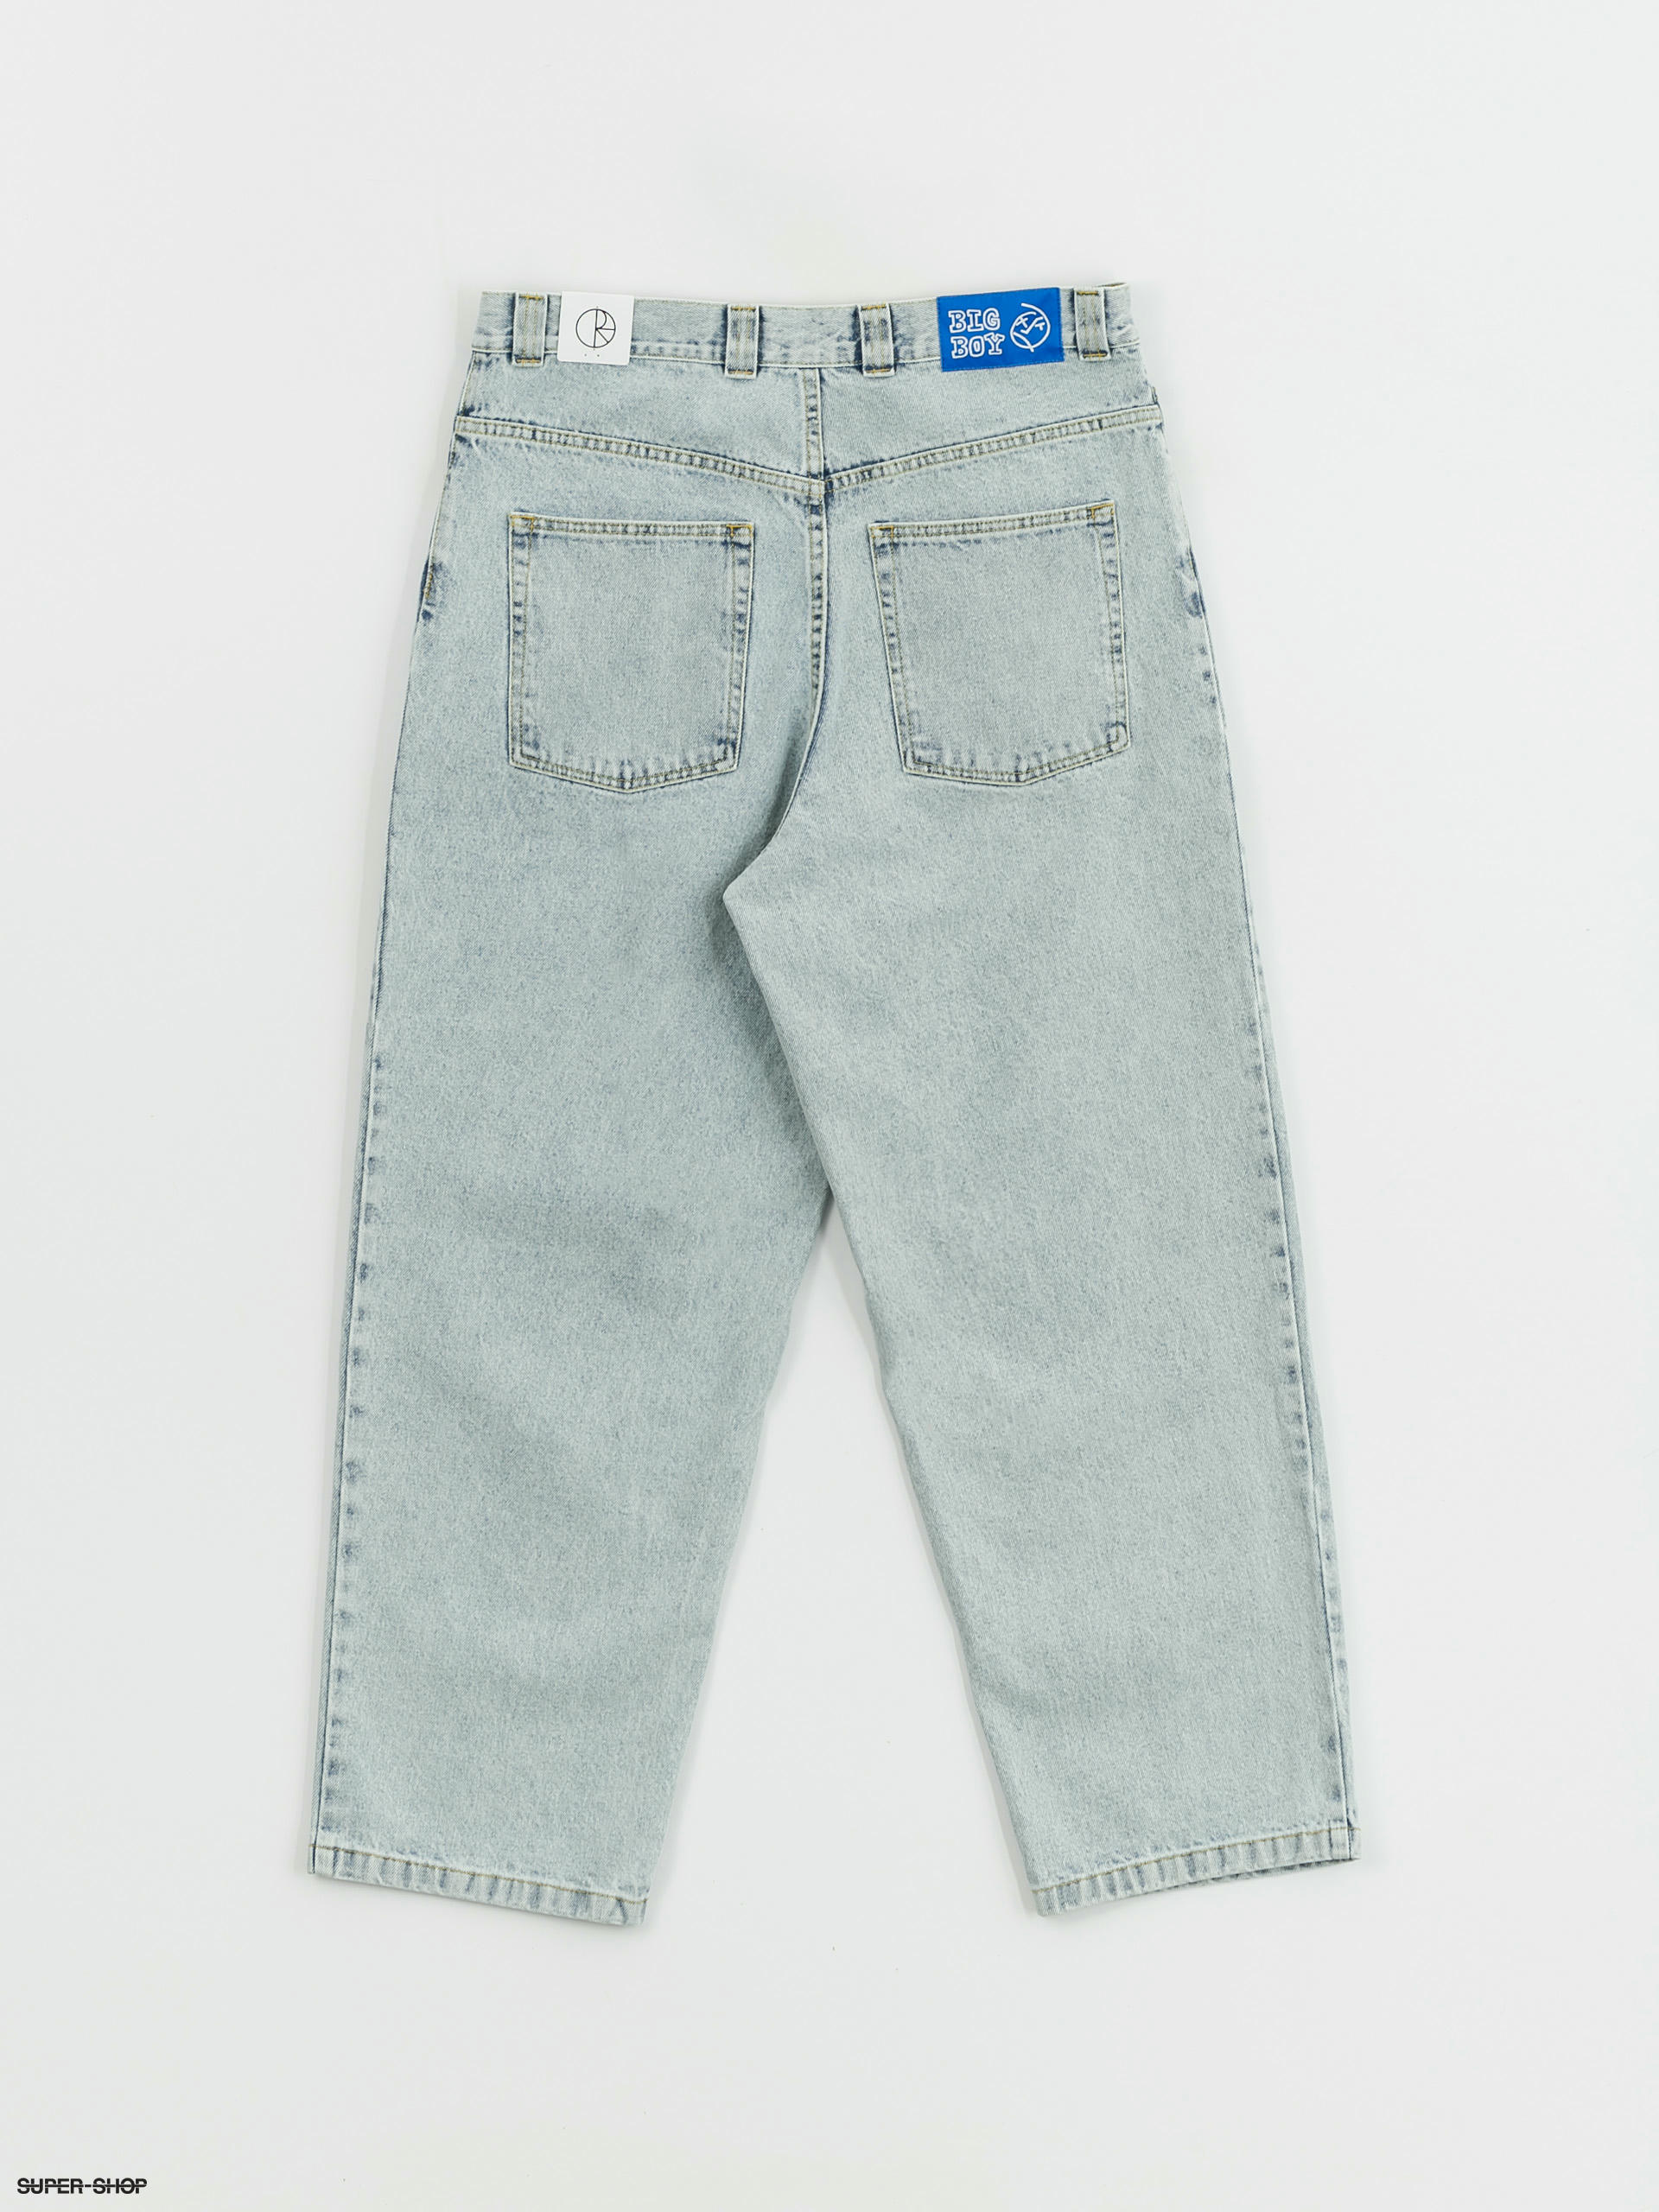 Polar Skate Big Boy Jeans Pants (light blue)